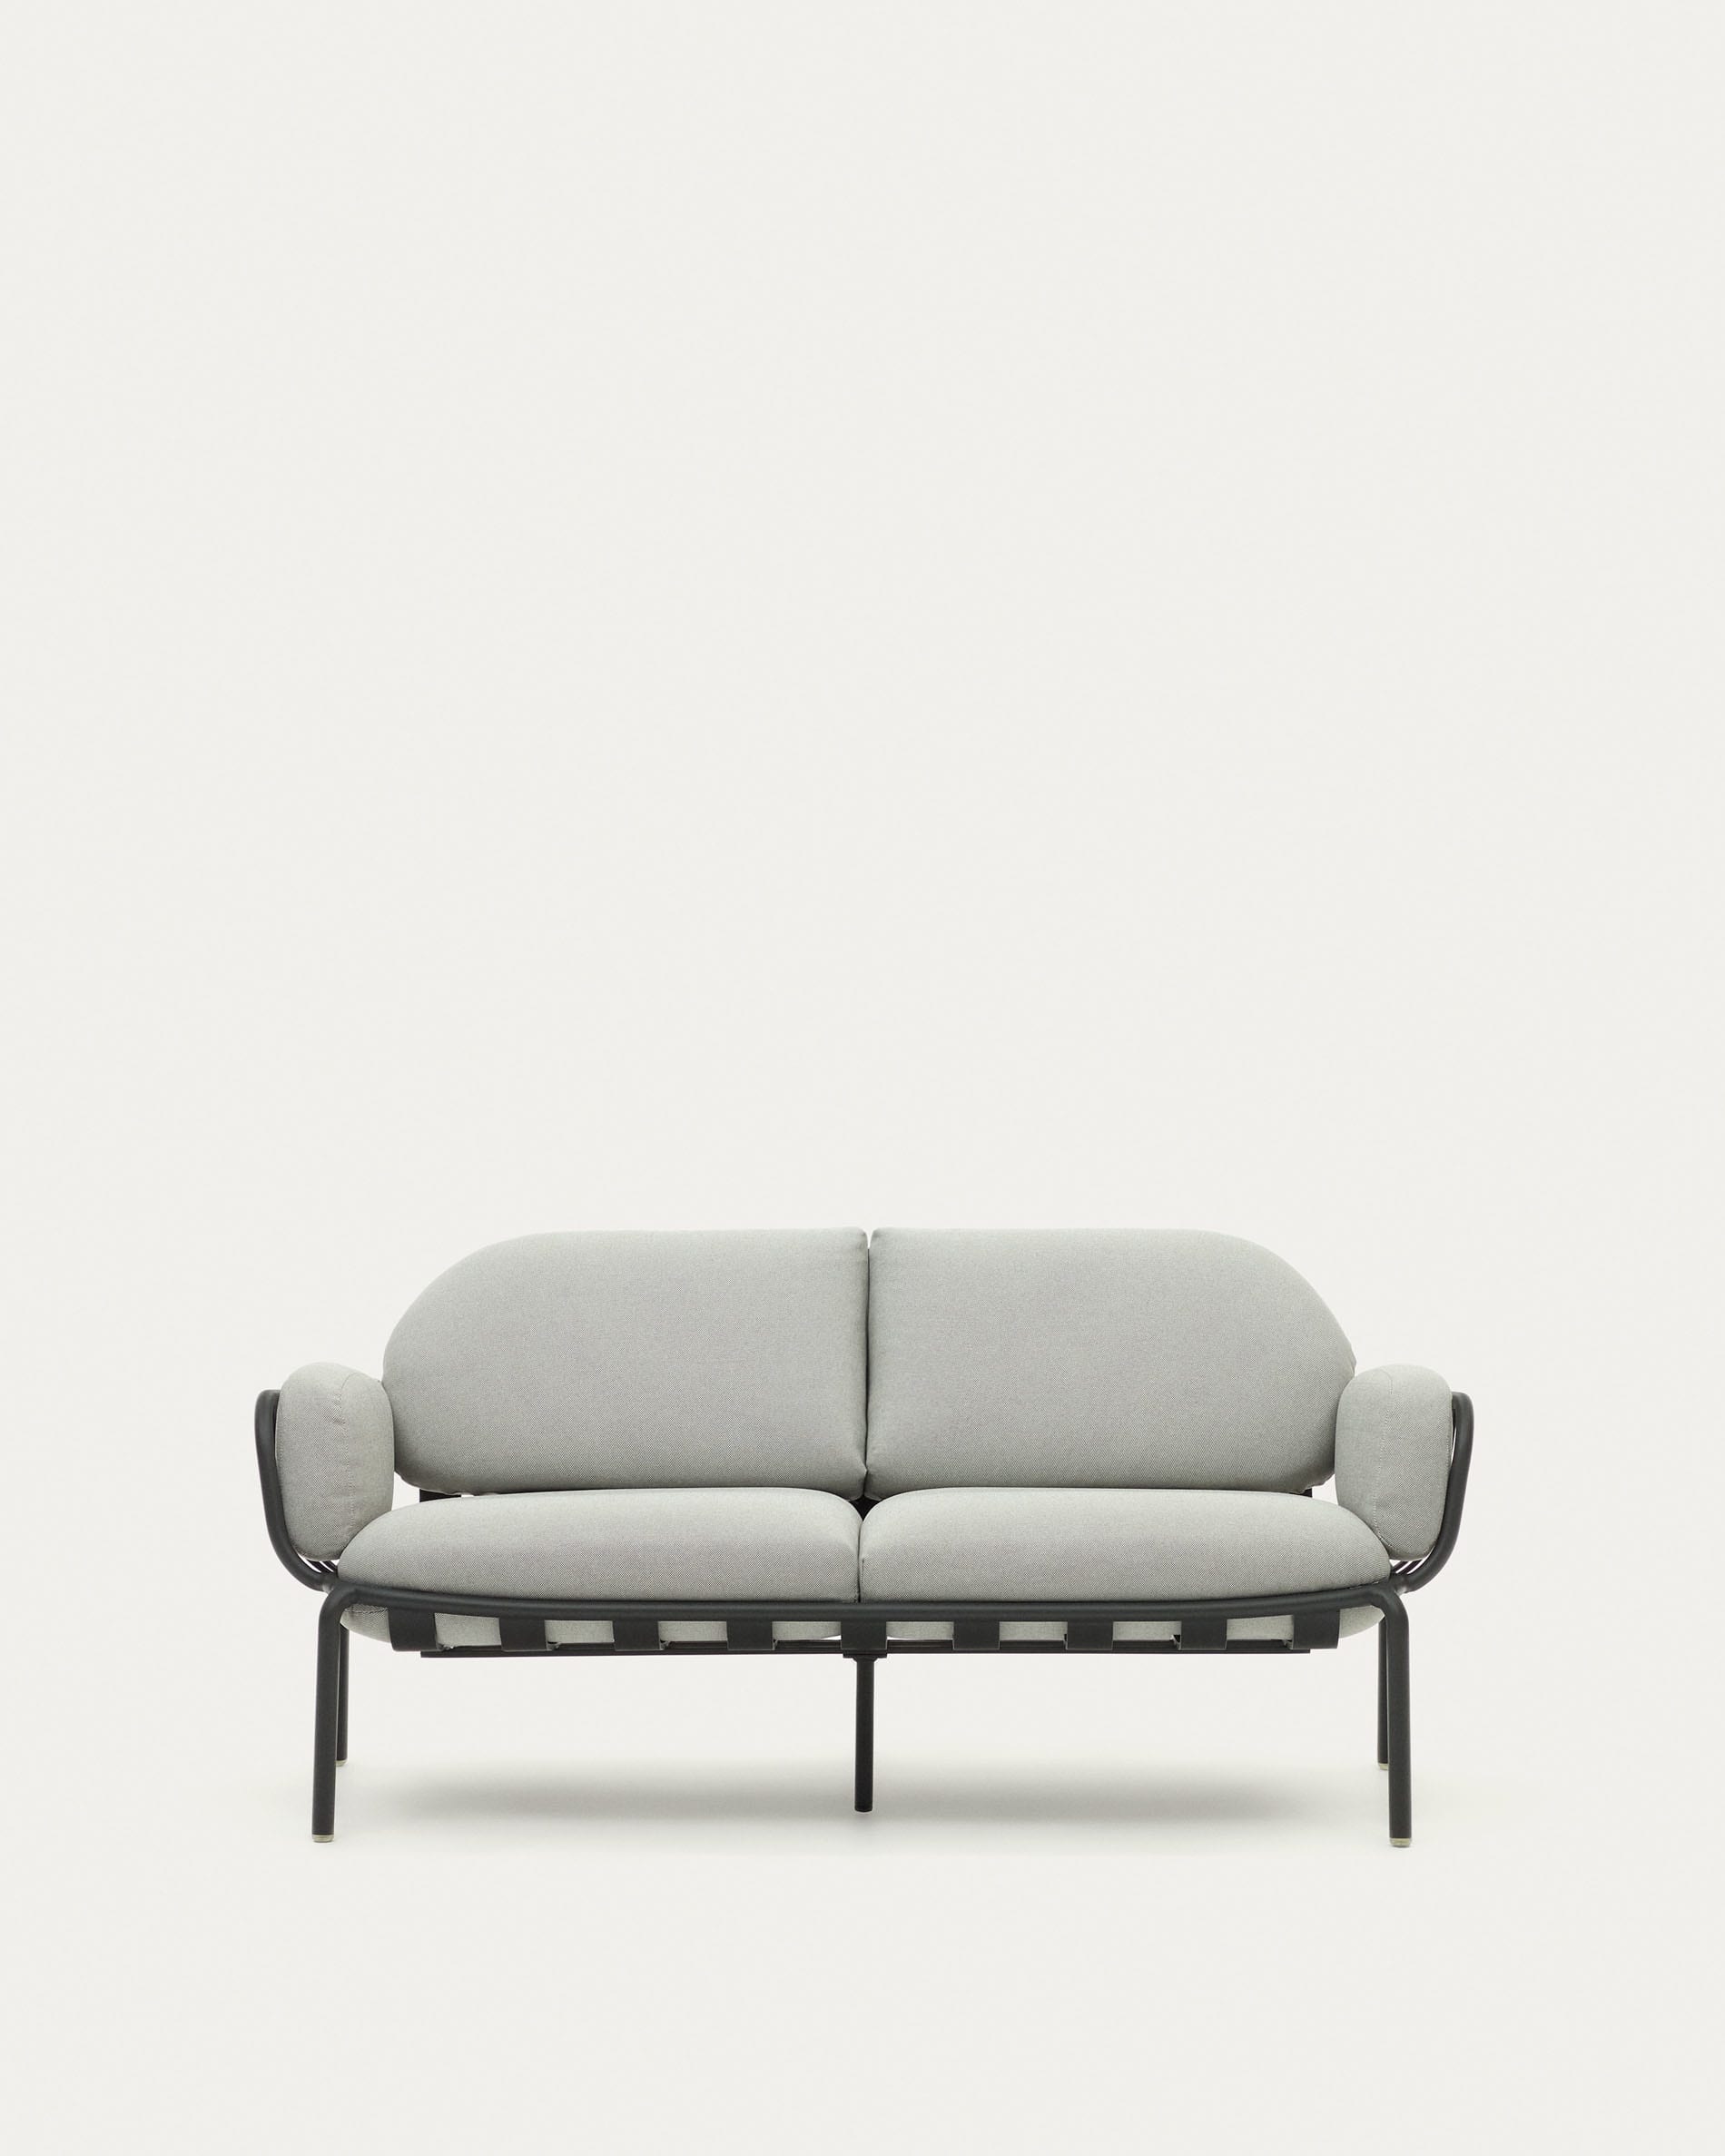 Joncols outdoor aluminium 2 seater sofa with powder coated grey finish, 165 cm